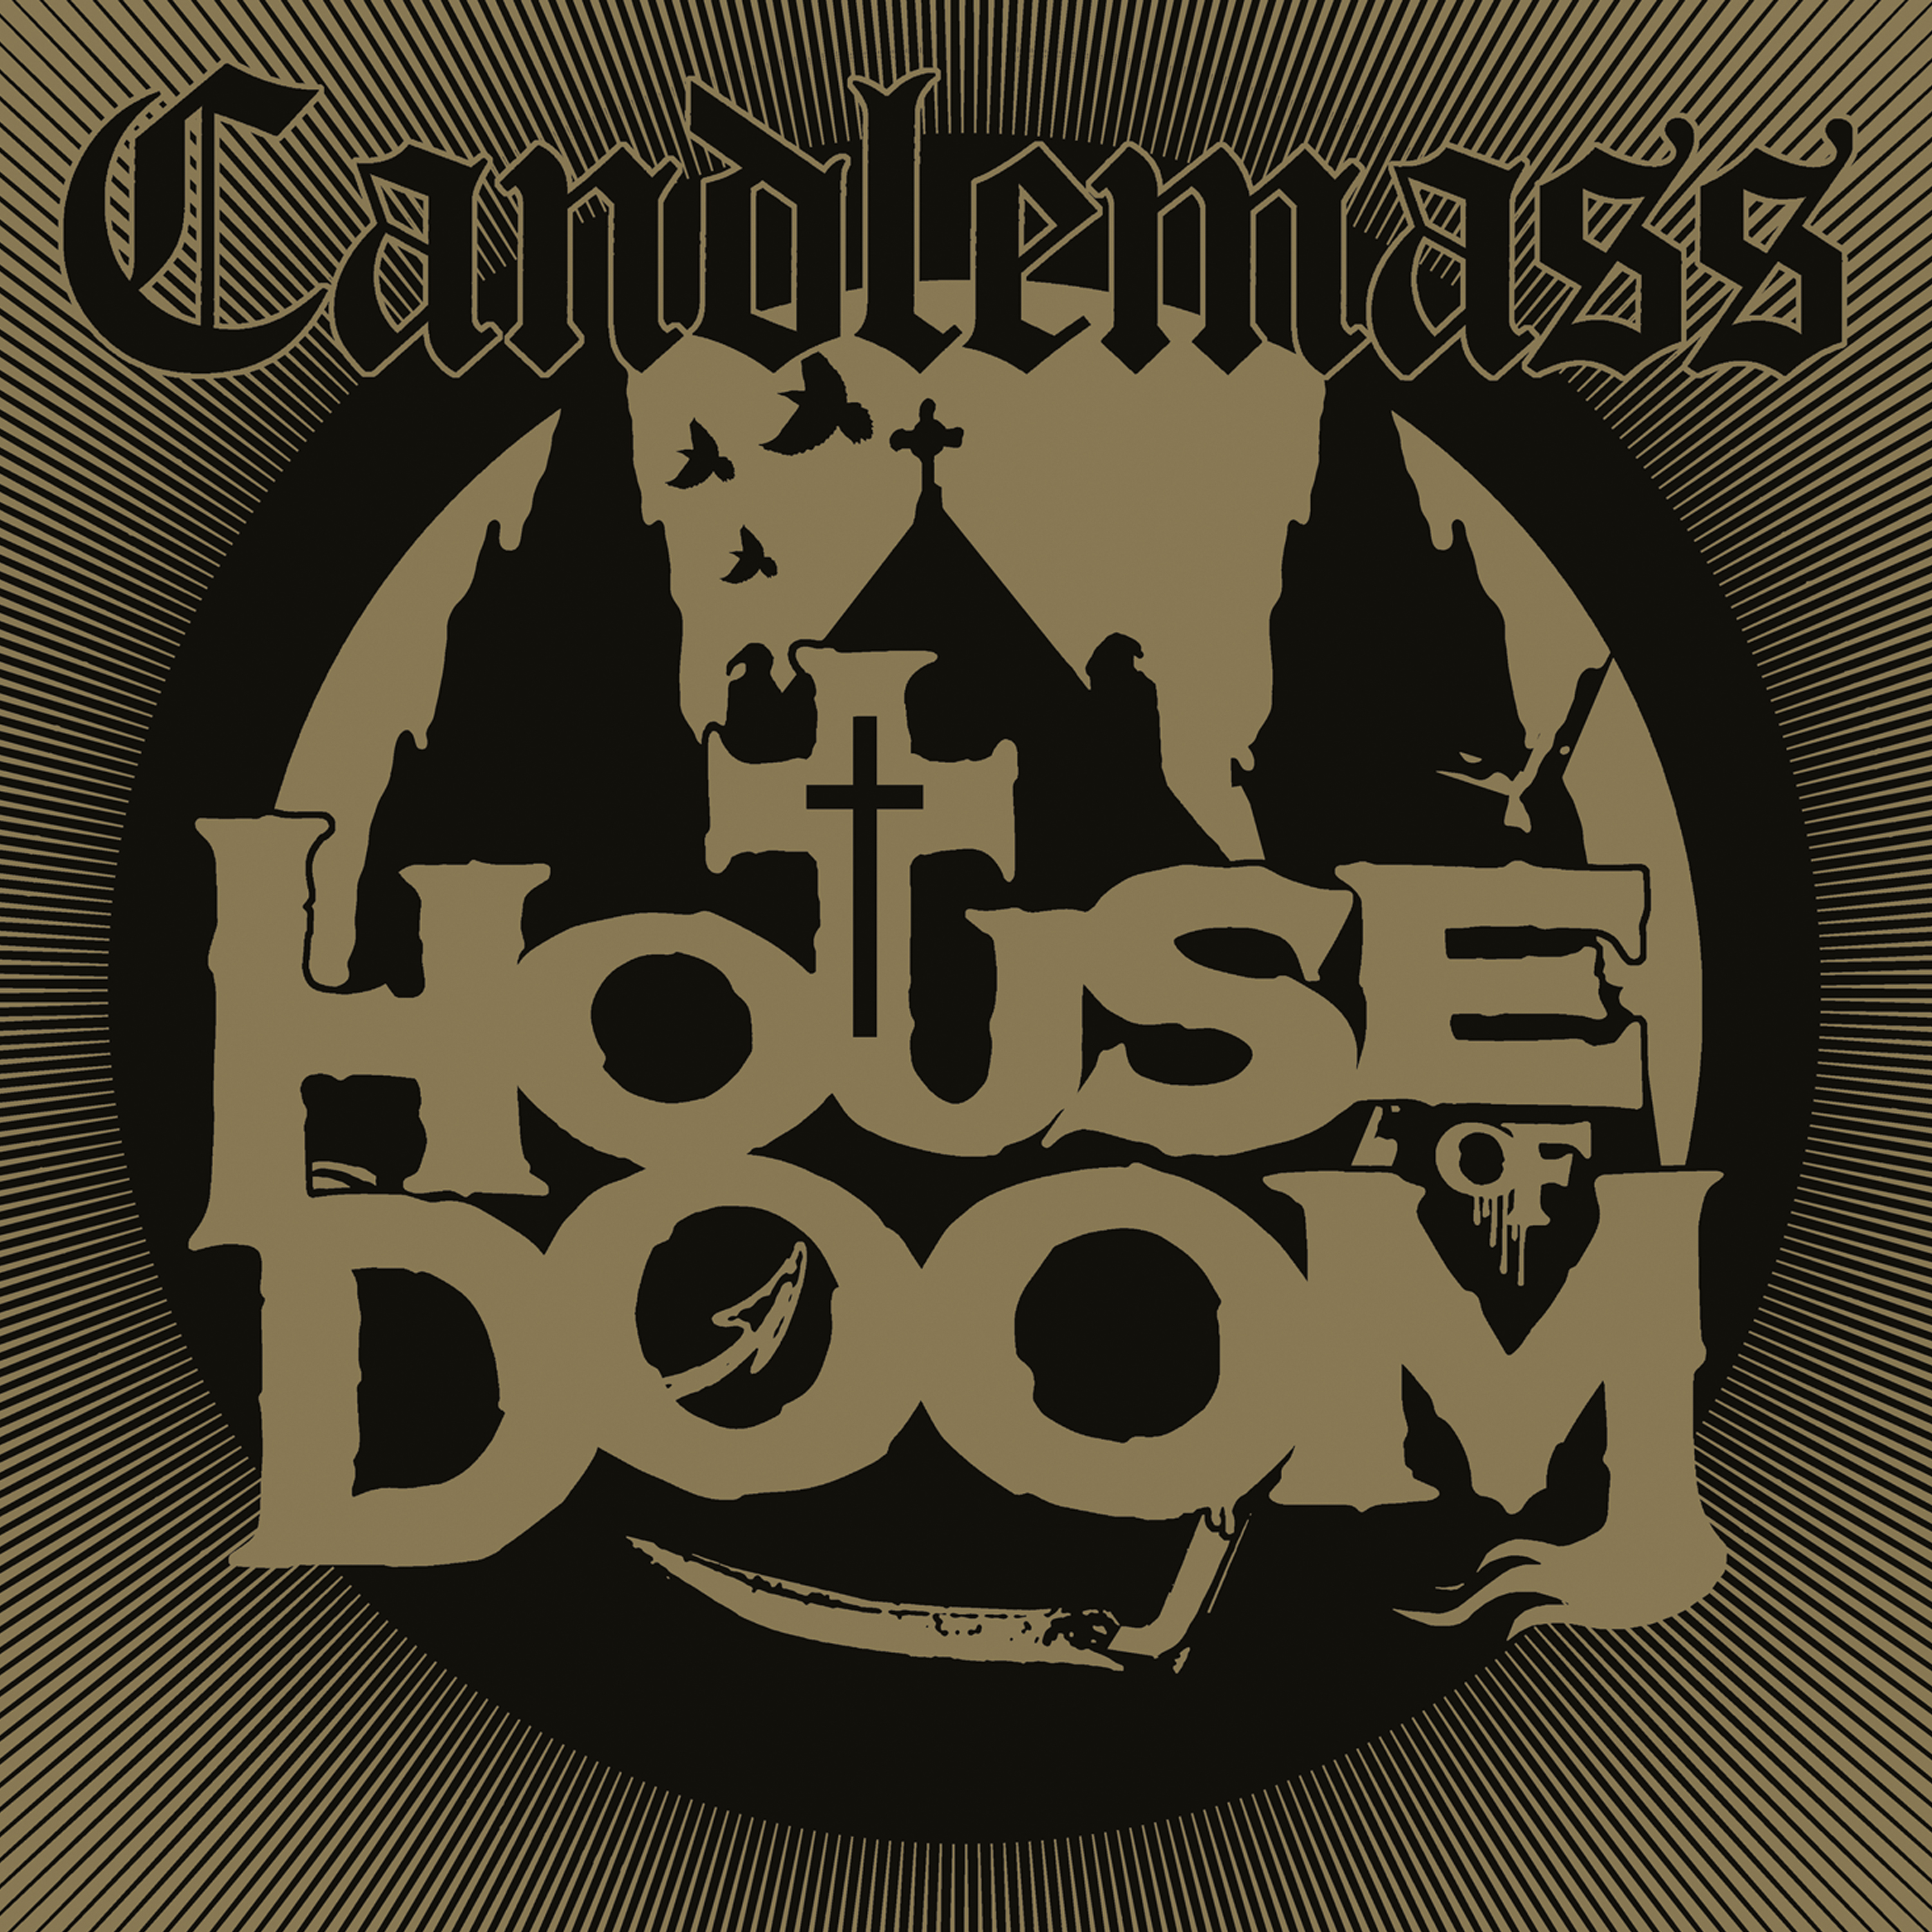 Candlemass – House of Doom (EP)